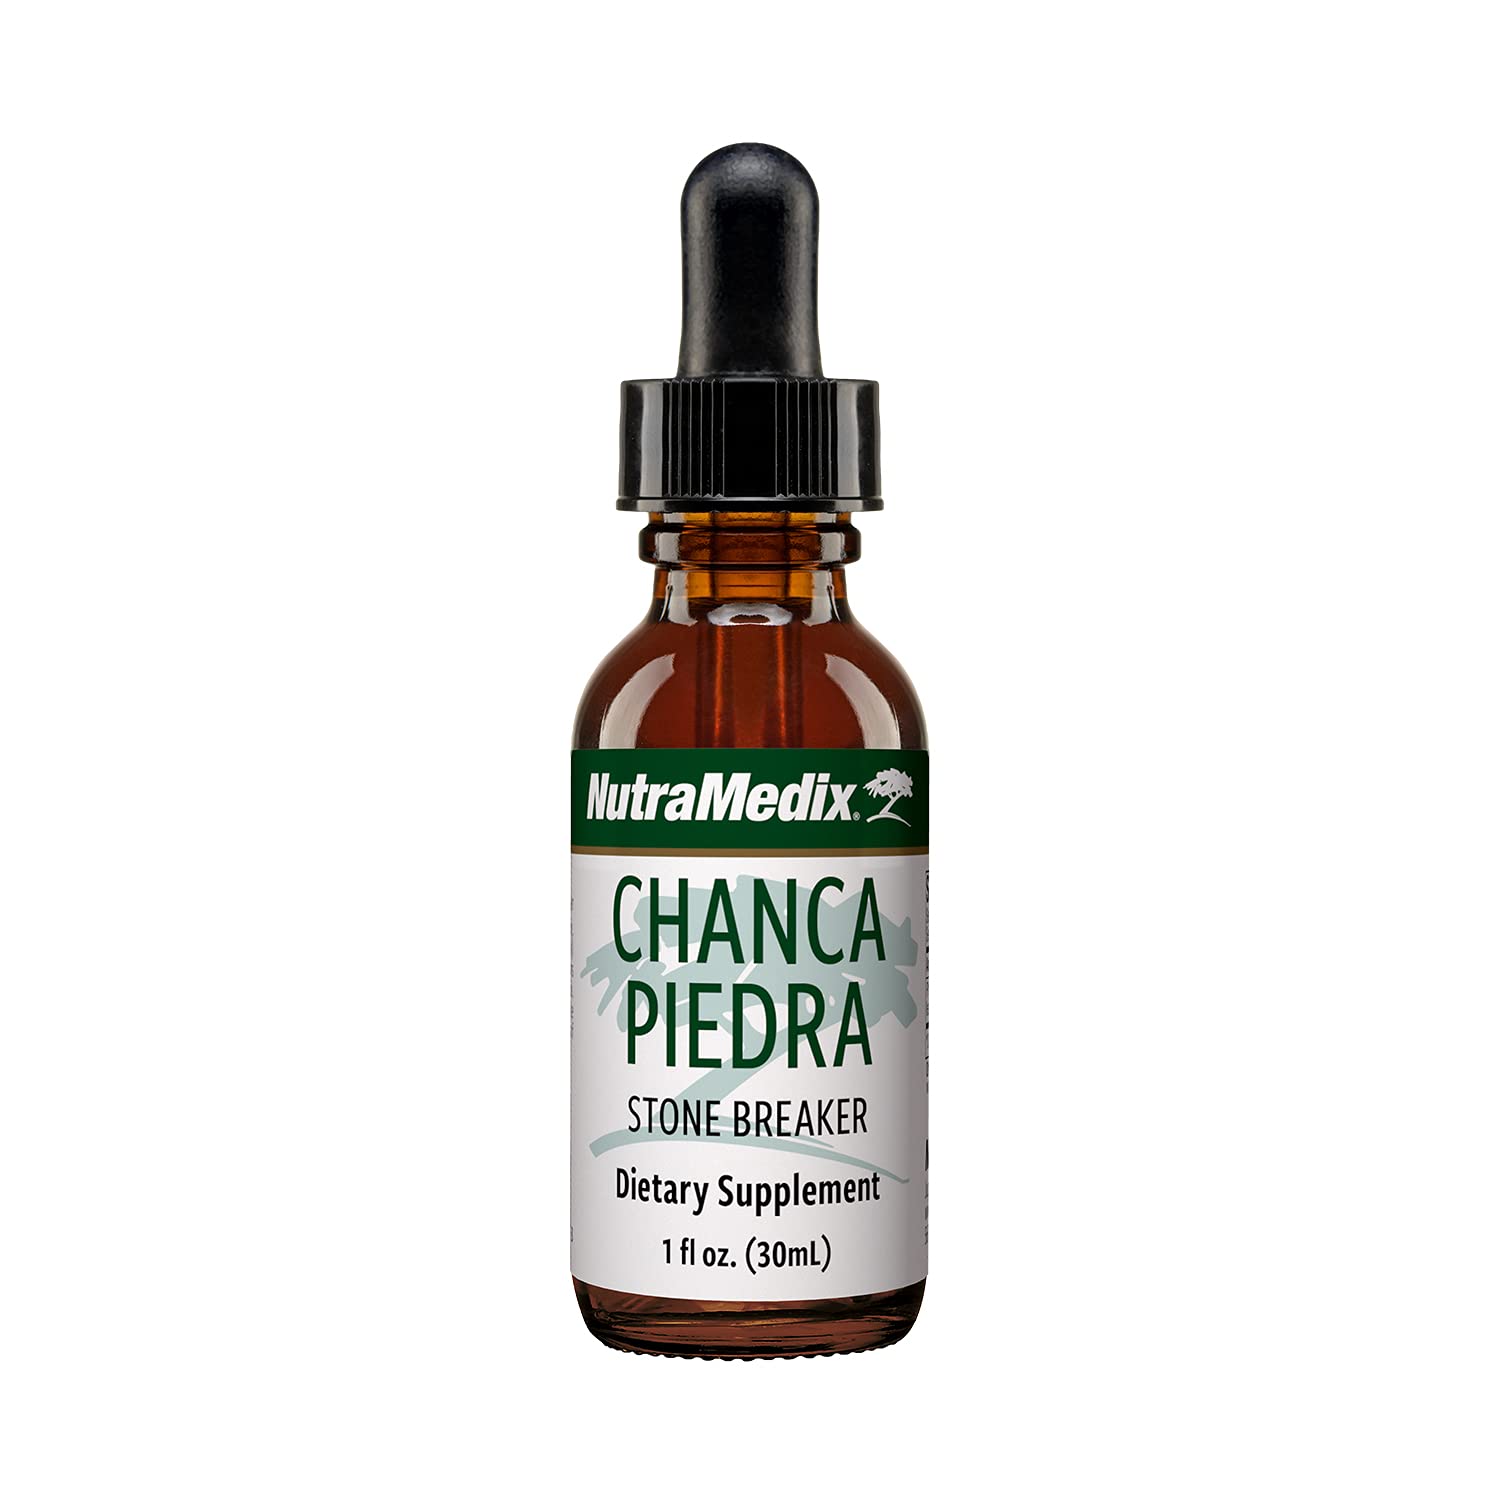 NutraMedix Chanca Piedra Stone Breaker Drops - Liquid Supplement for K